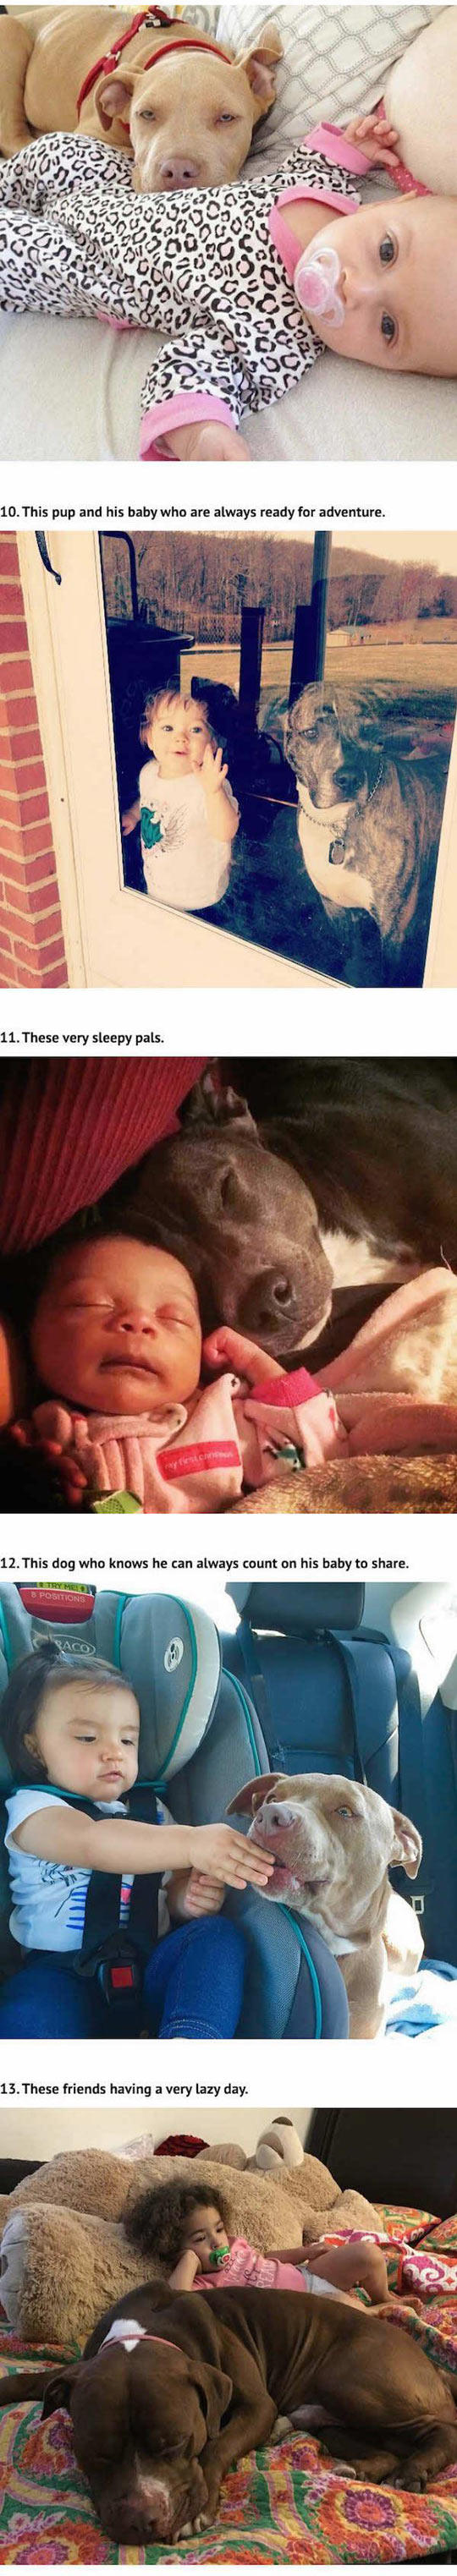 3funny-pitbulls-dog-with-babies-sleeping